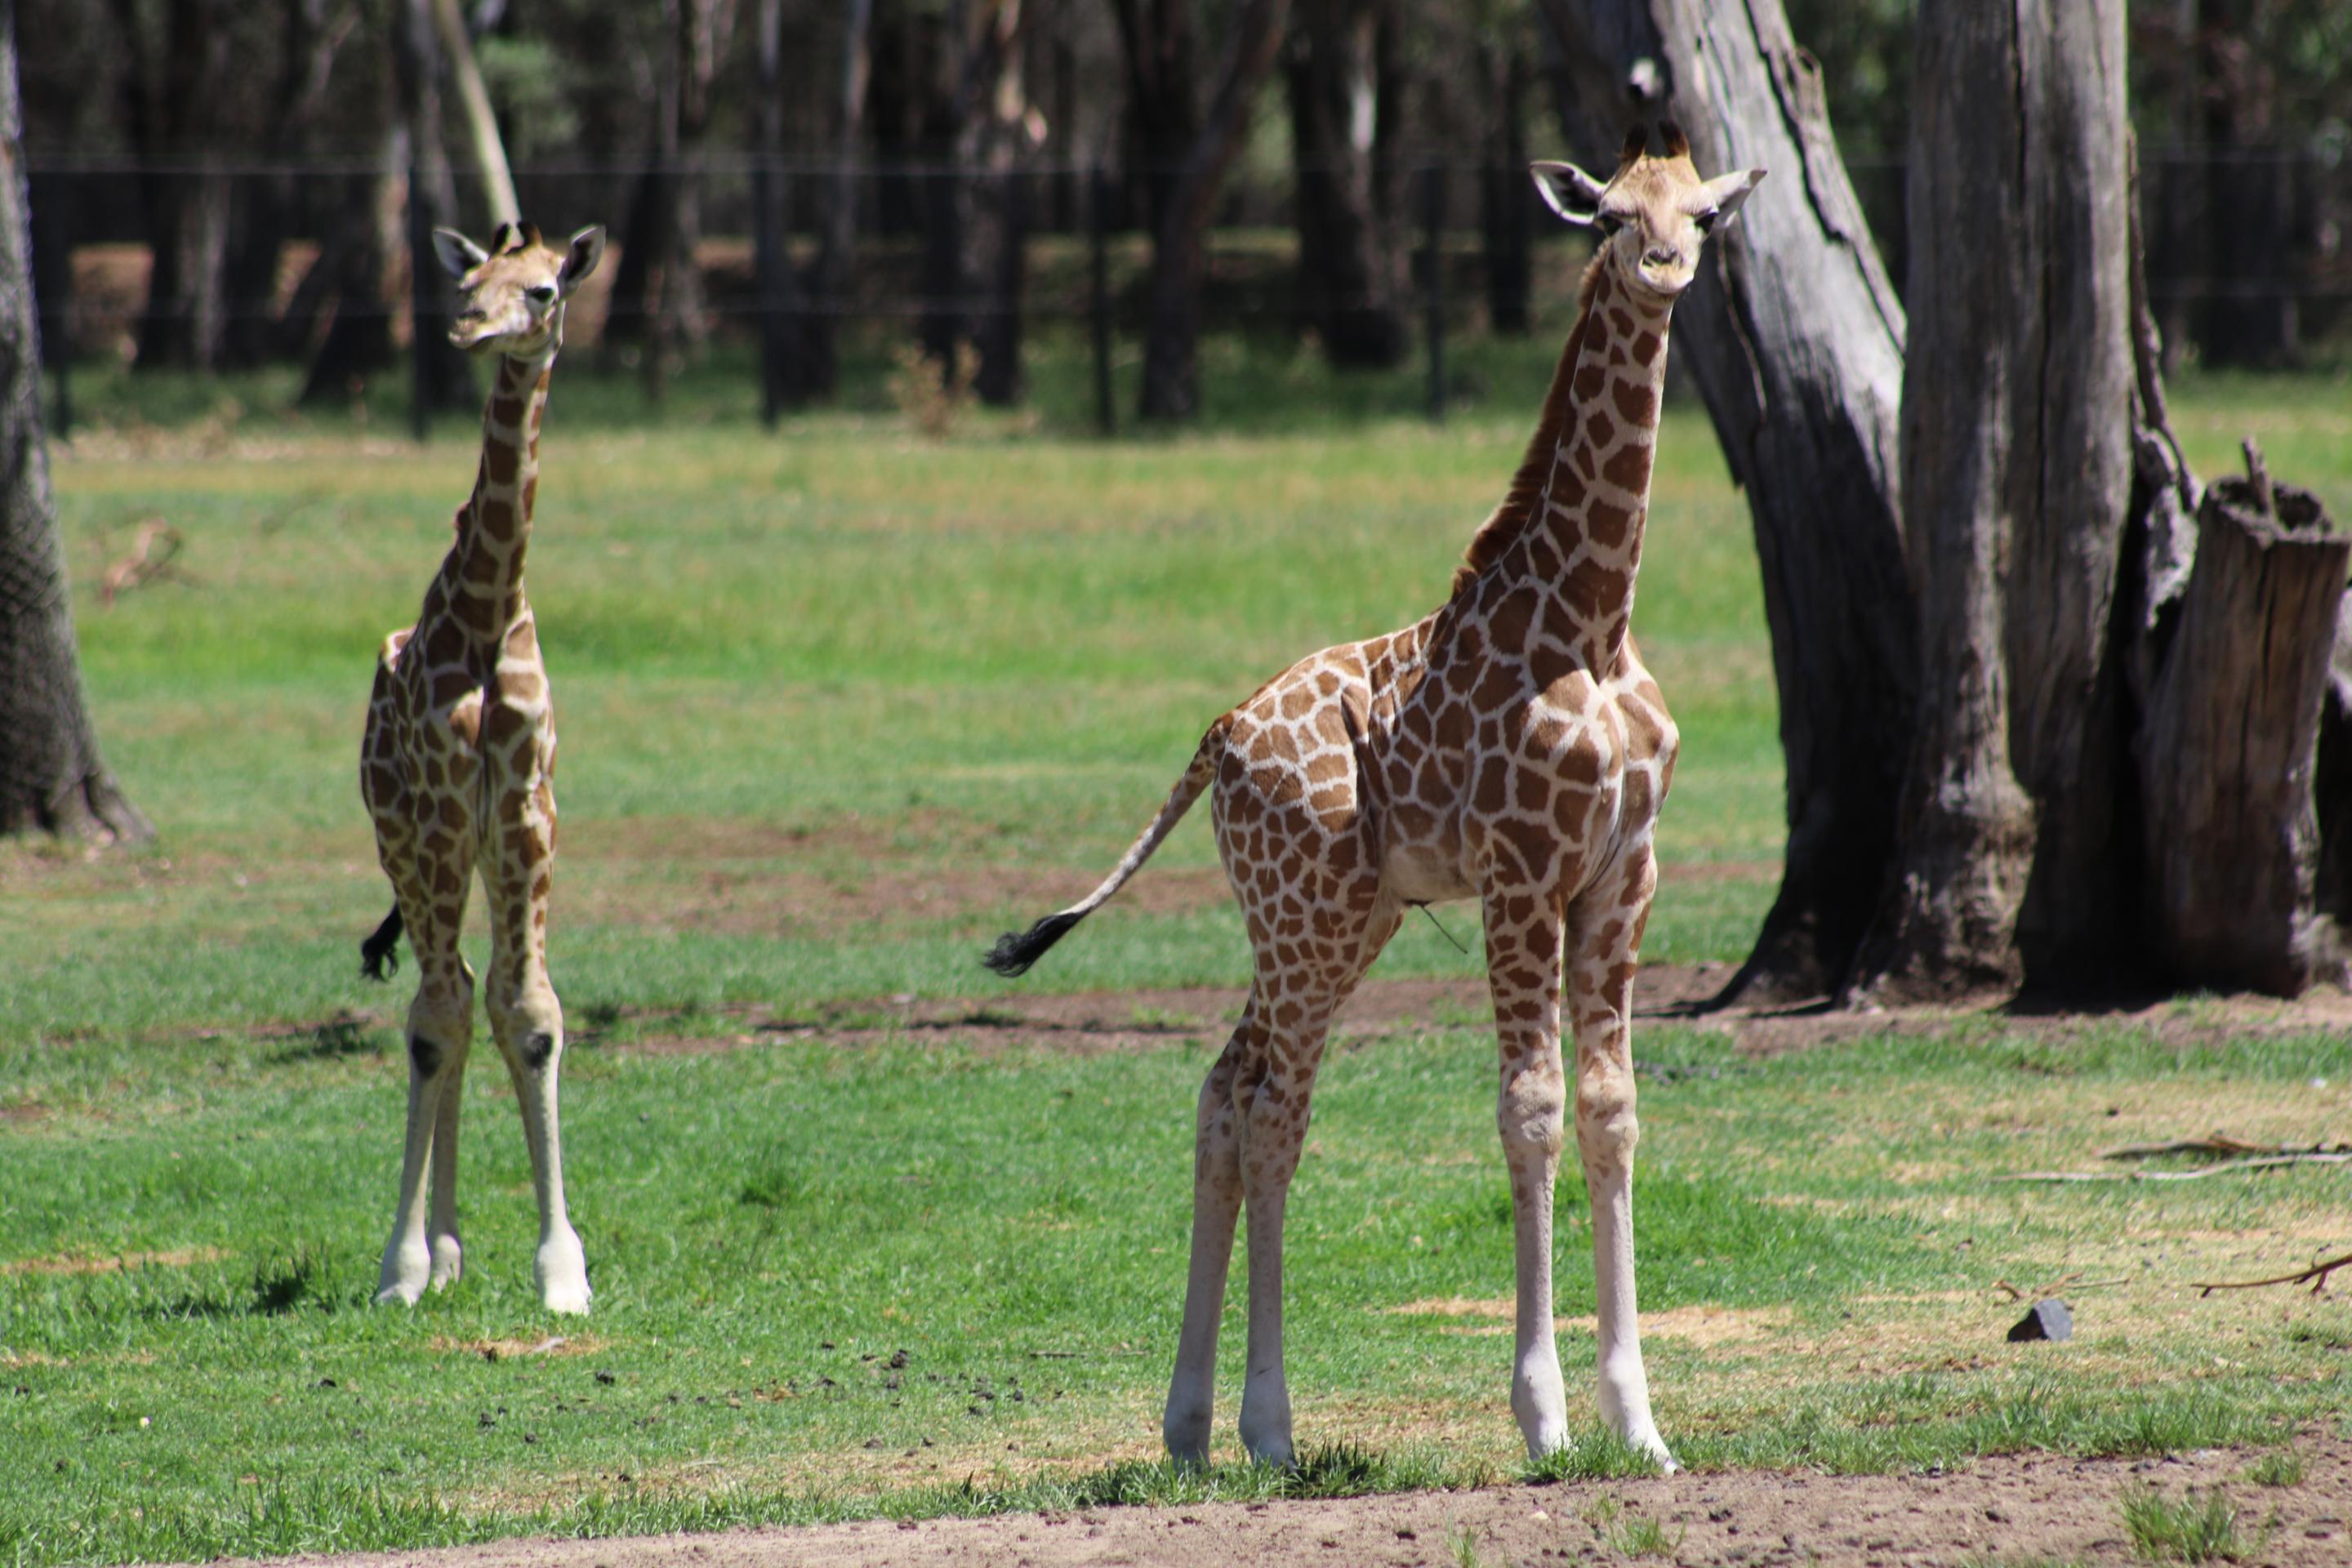 Giraffe calves born in January 2019